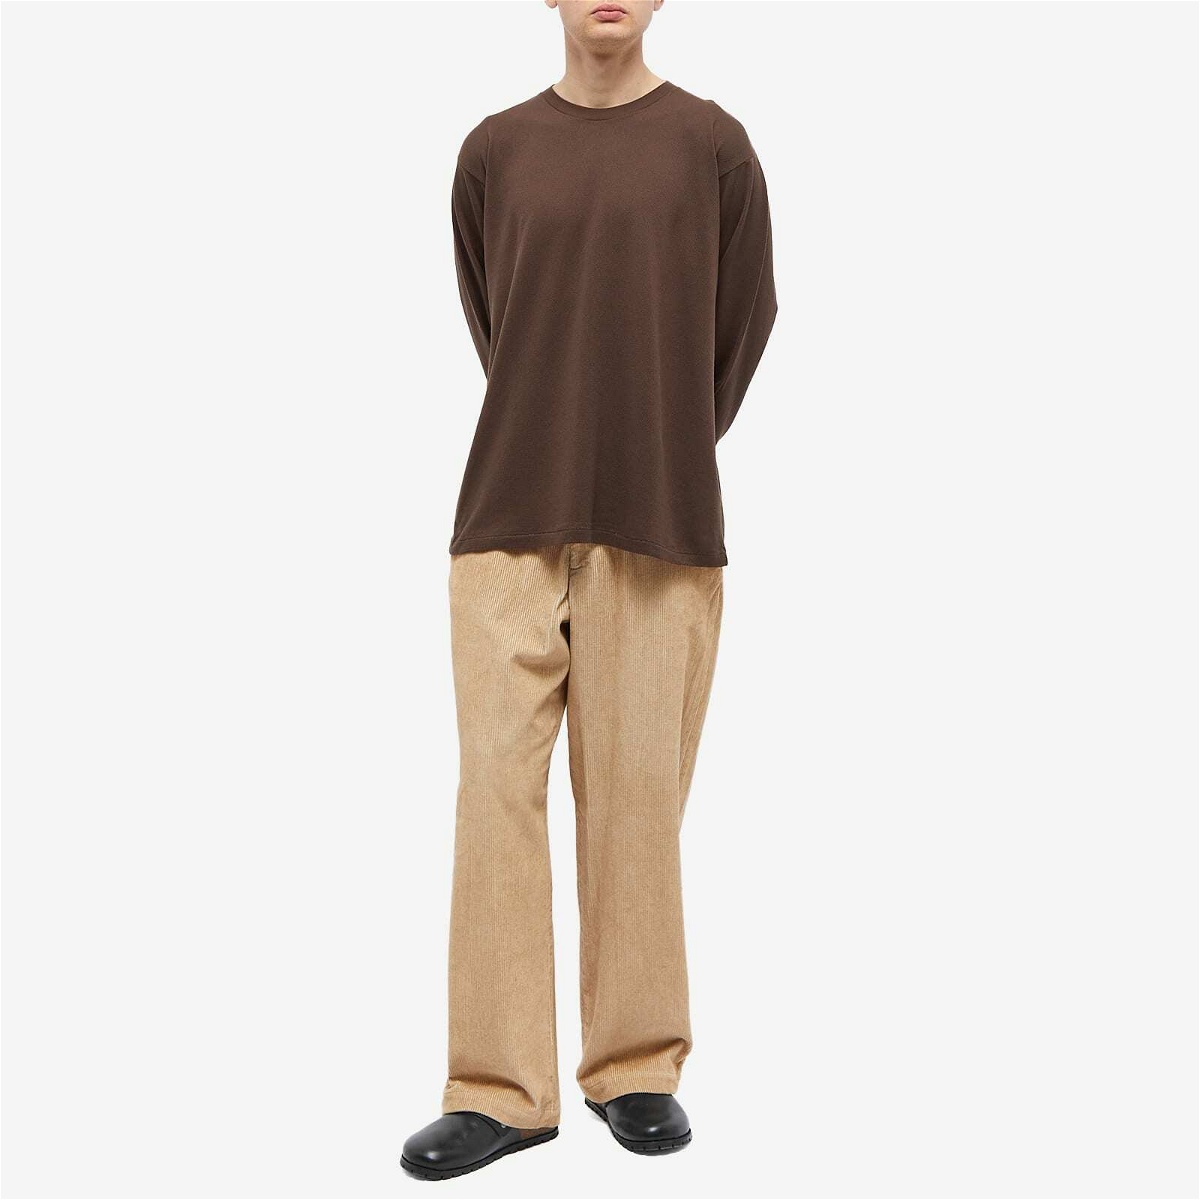 Auralee Men's Long Sleeve Cotton Mesh T-Shirt in Dark Brown Auralee